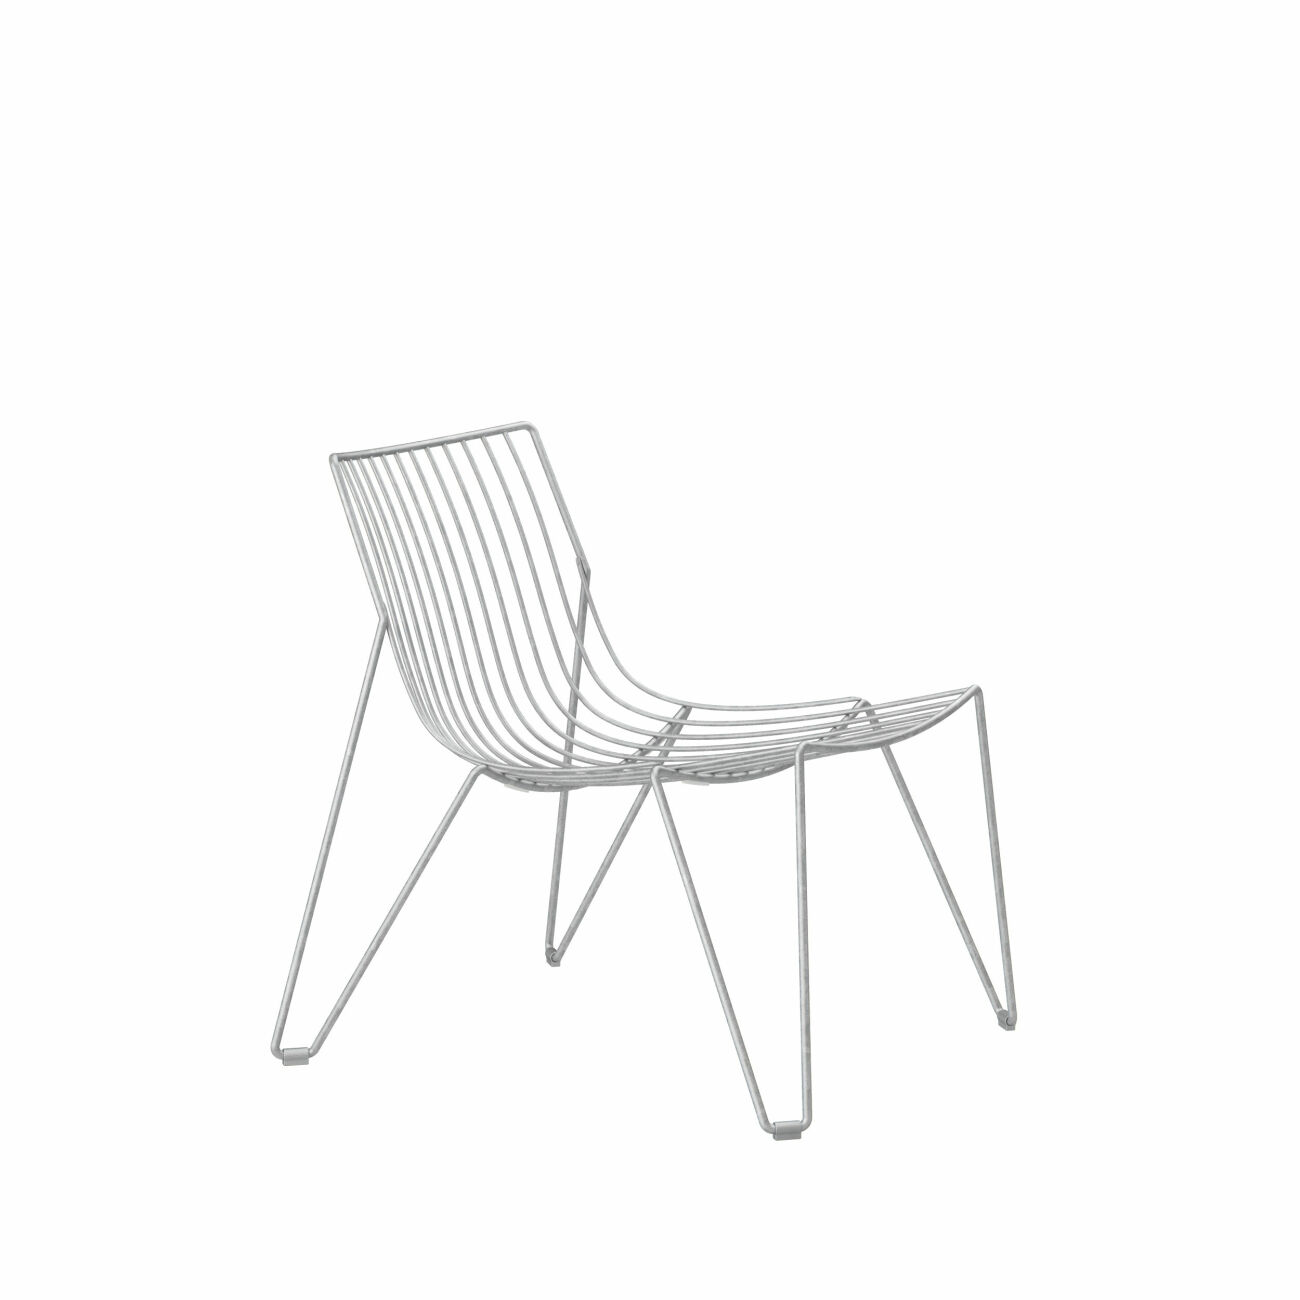 Stol Tio Easy Chair från Massproductions